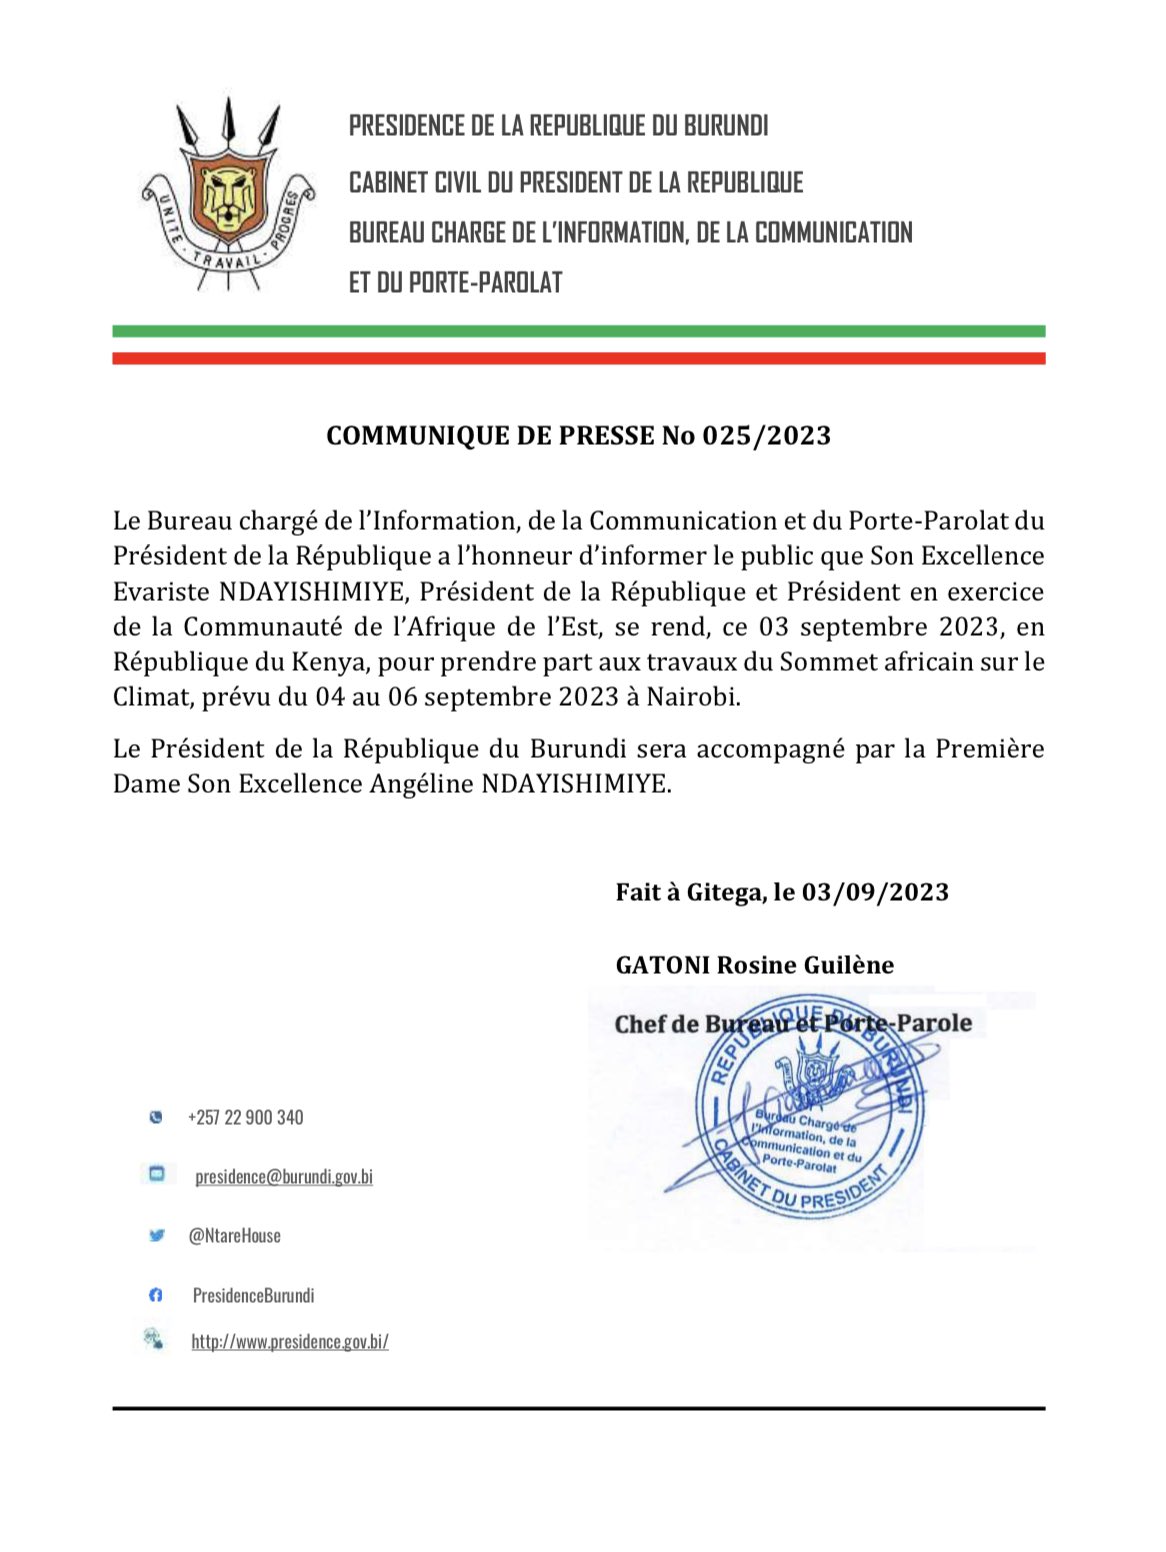 bdi burundi president climat 01 03092023 ntarerushatsihouse